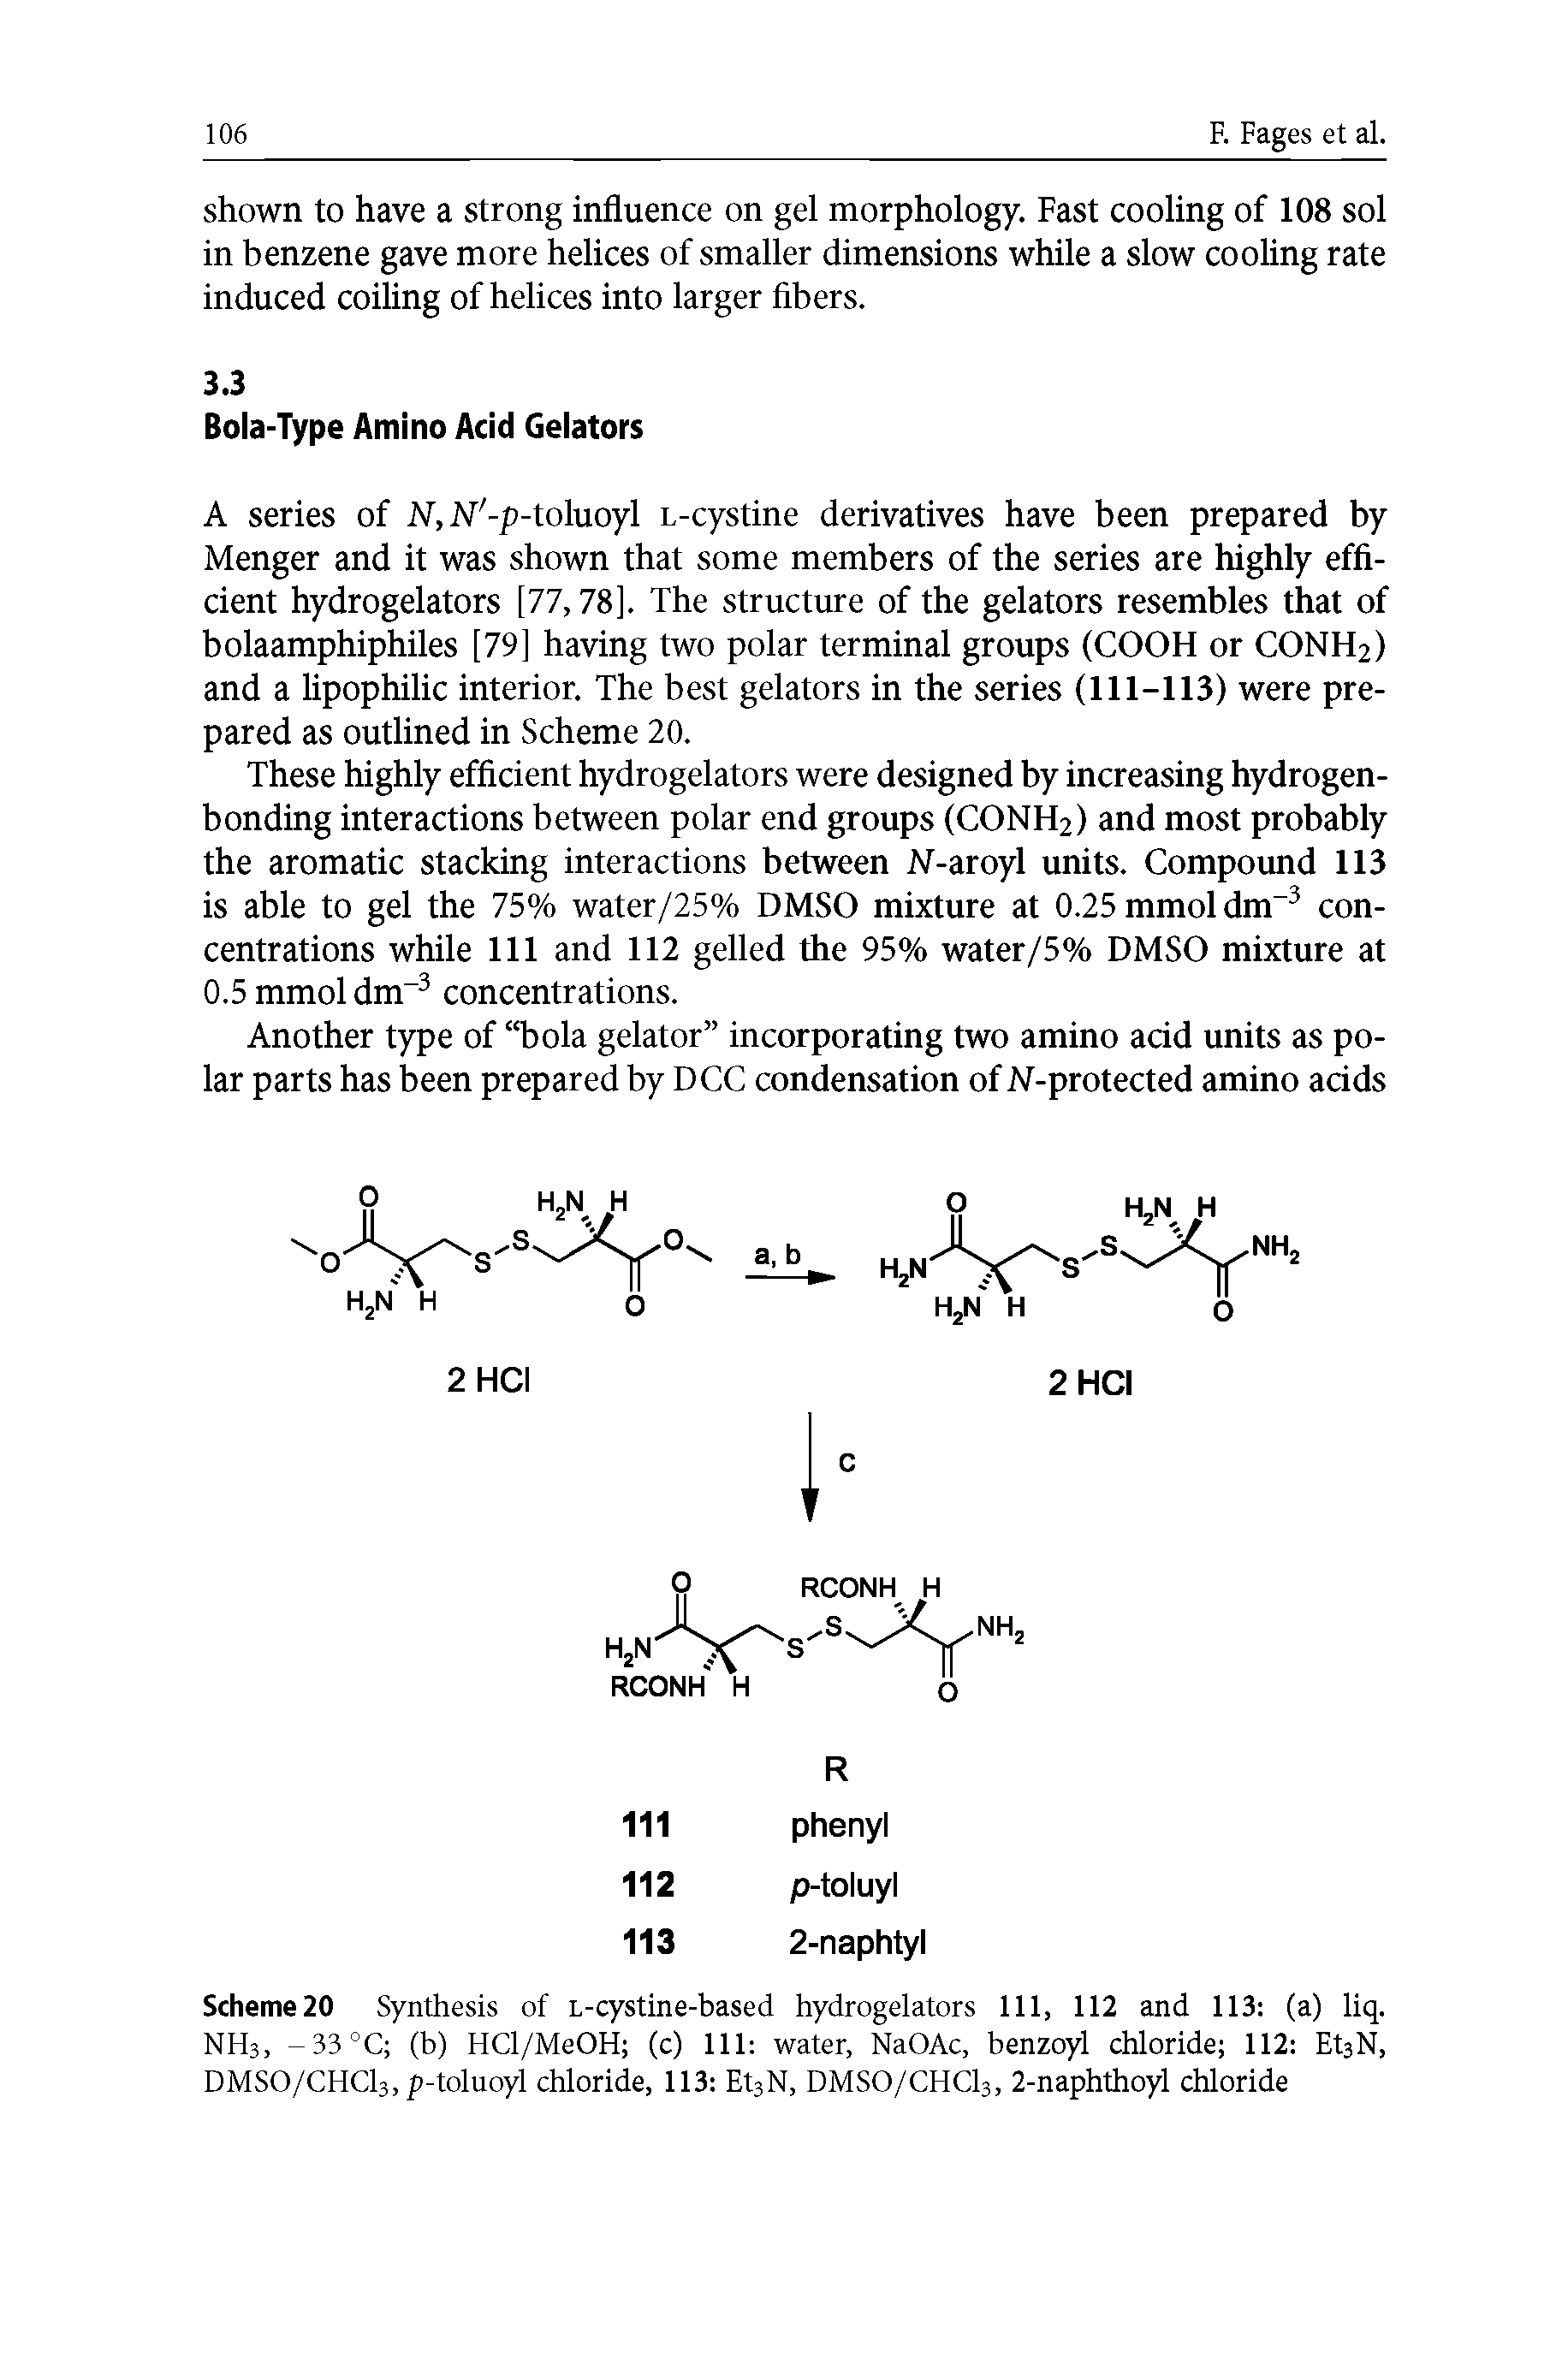 Scheme20 Synthesis of L-cystine-based hydrogelators 111, 112 and 113 (a) liq. NH3, -33°C (b) HCl/MeOH (c) 111 water, NaOAc, benzoyl chloride 112 EtsN, DMSO/CHCh.p-toluoyl chloride, 113 EtsN, DMSO/CHCI3, 2-naphthoyl chloride...